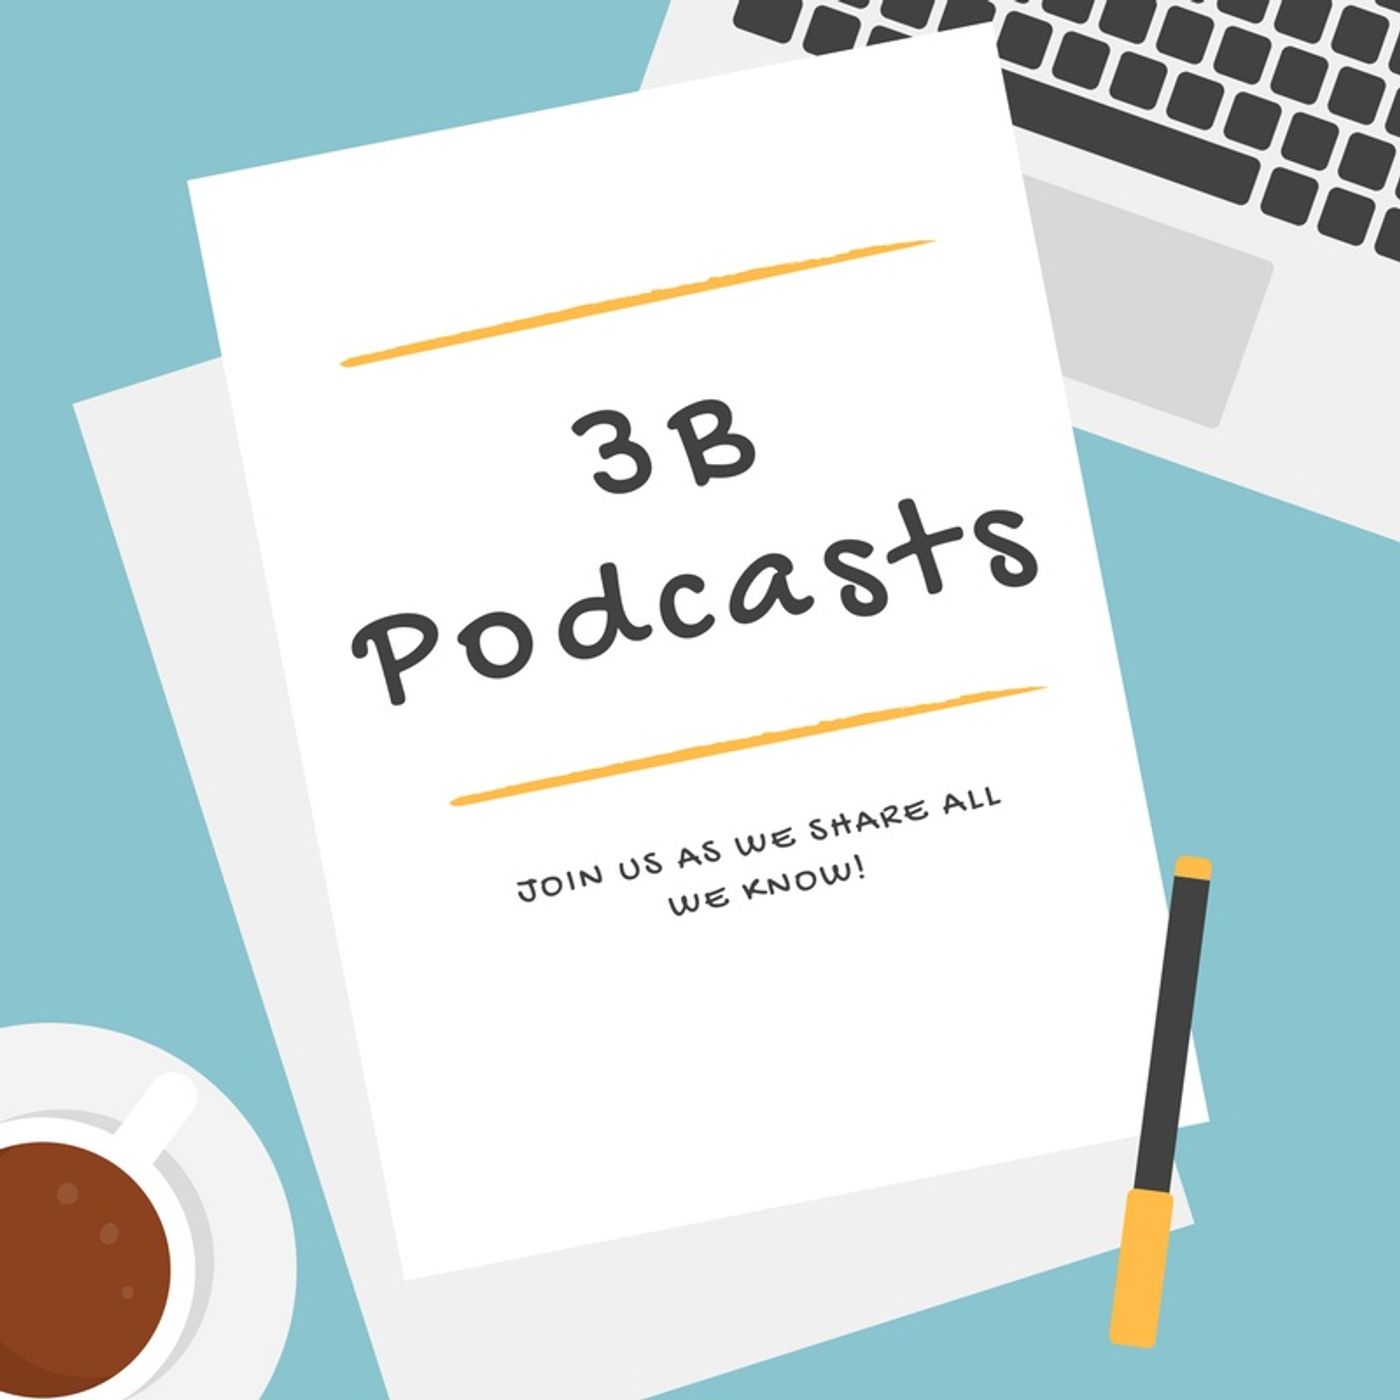 3B Podcasts